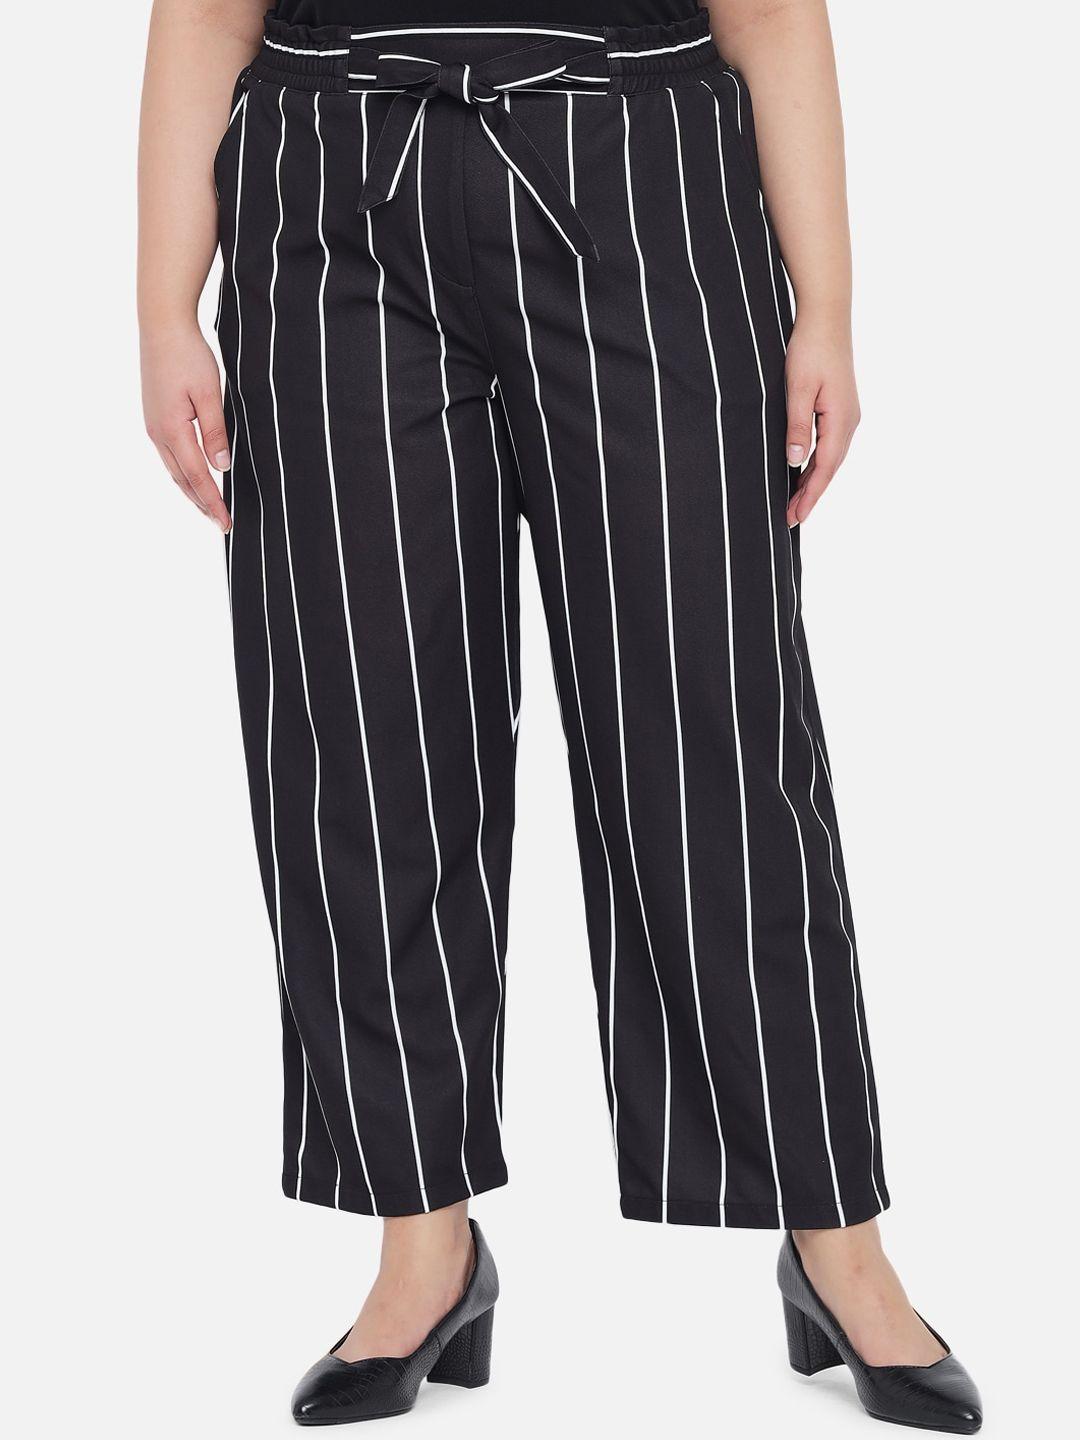 amydus-women-plus-size-black-&-white-striped-mid-rise-parallel-trousers